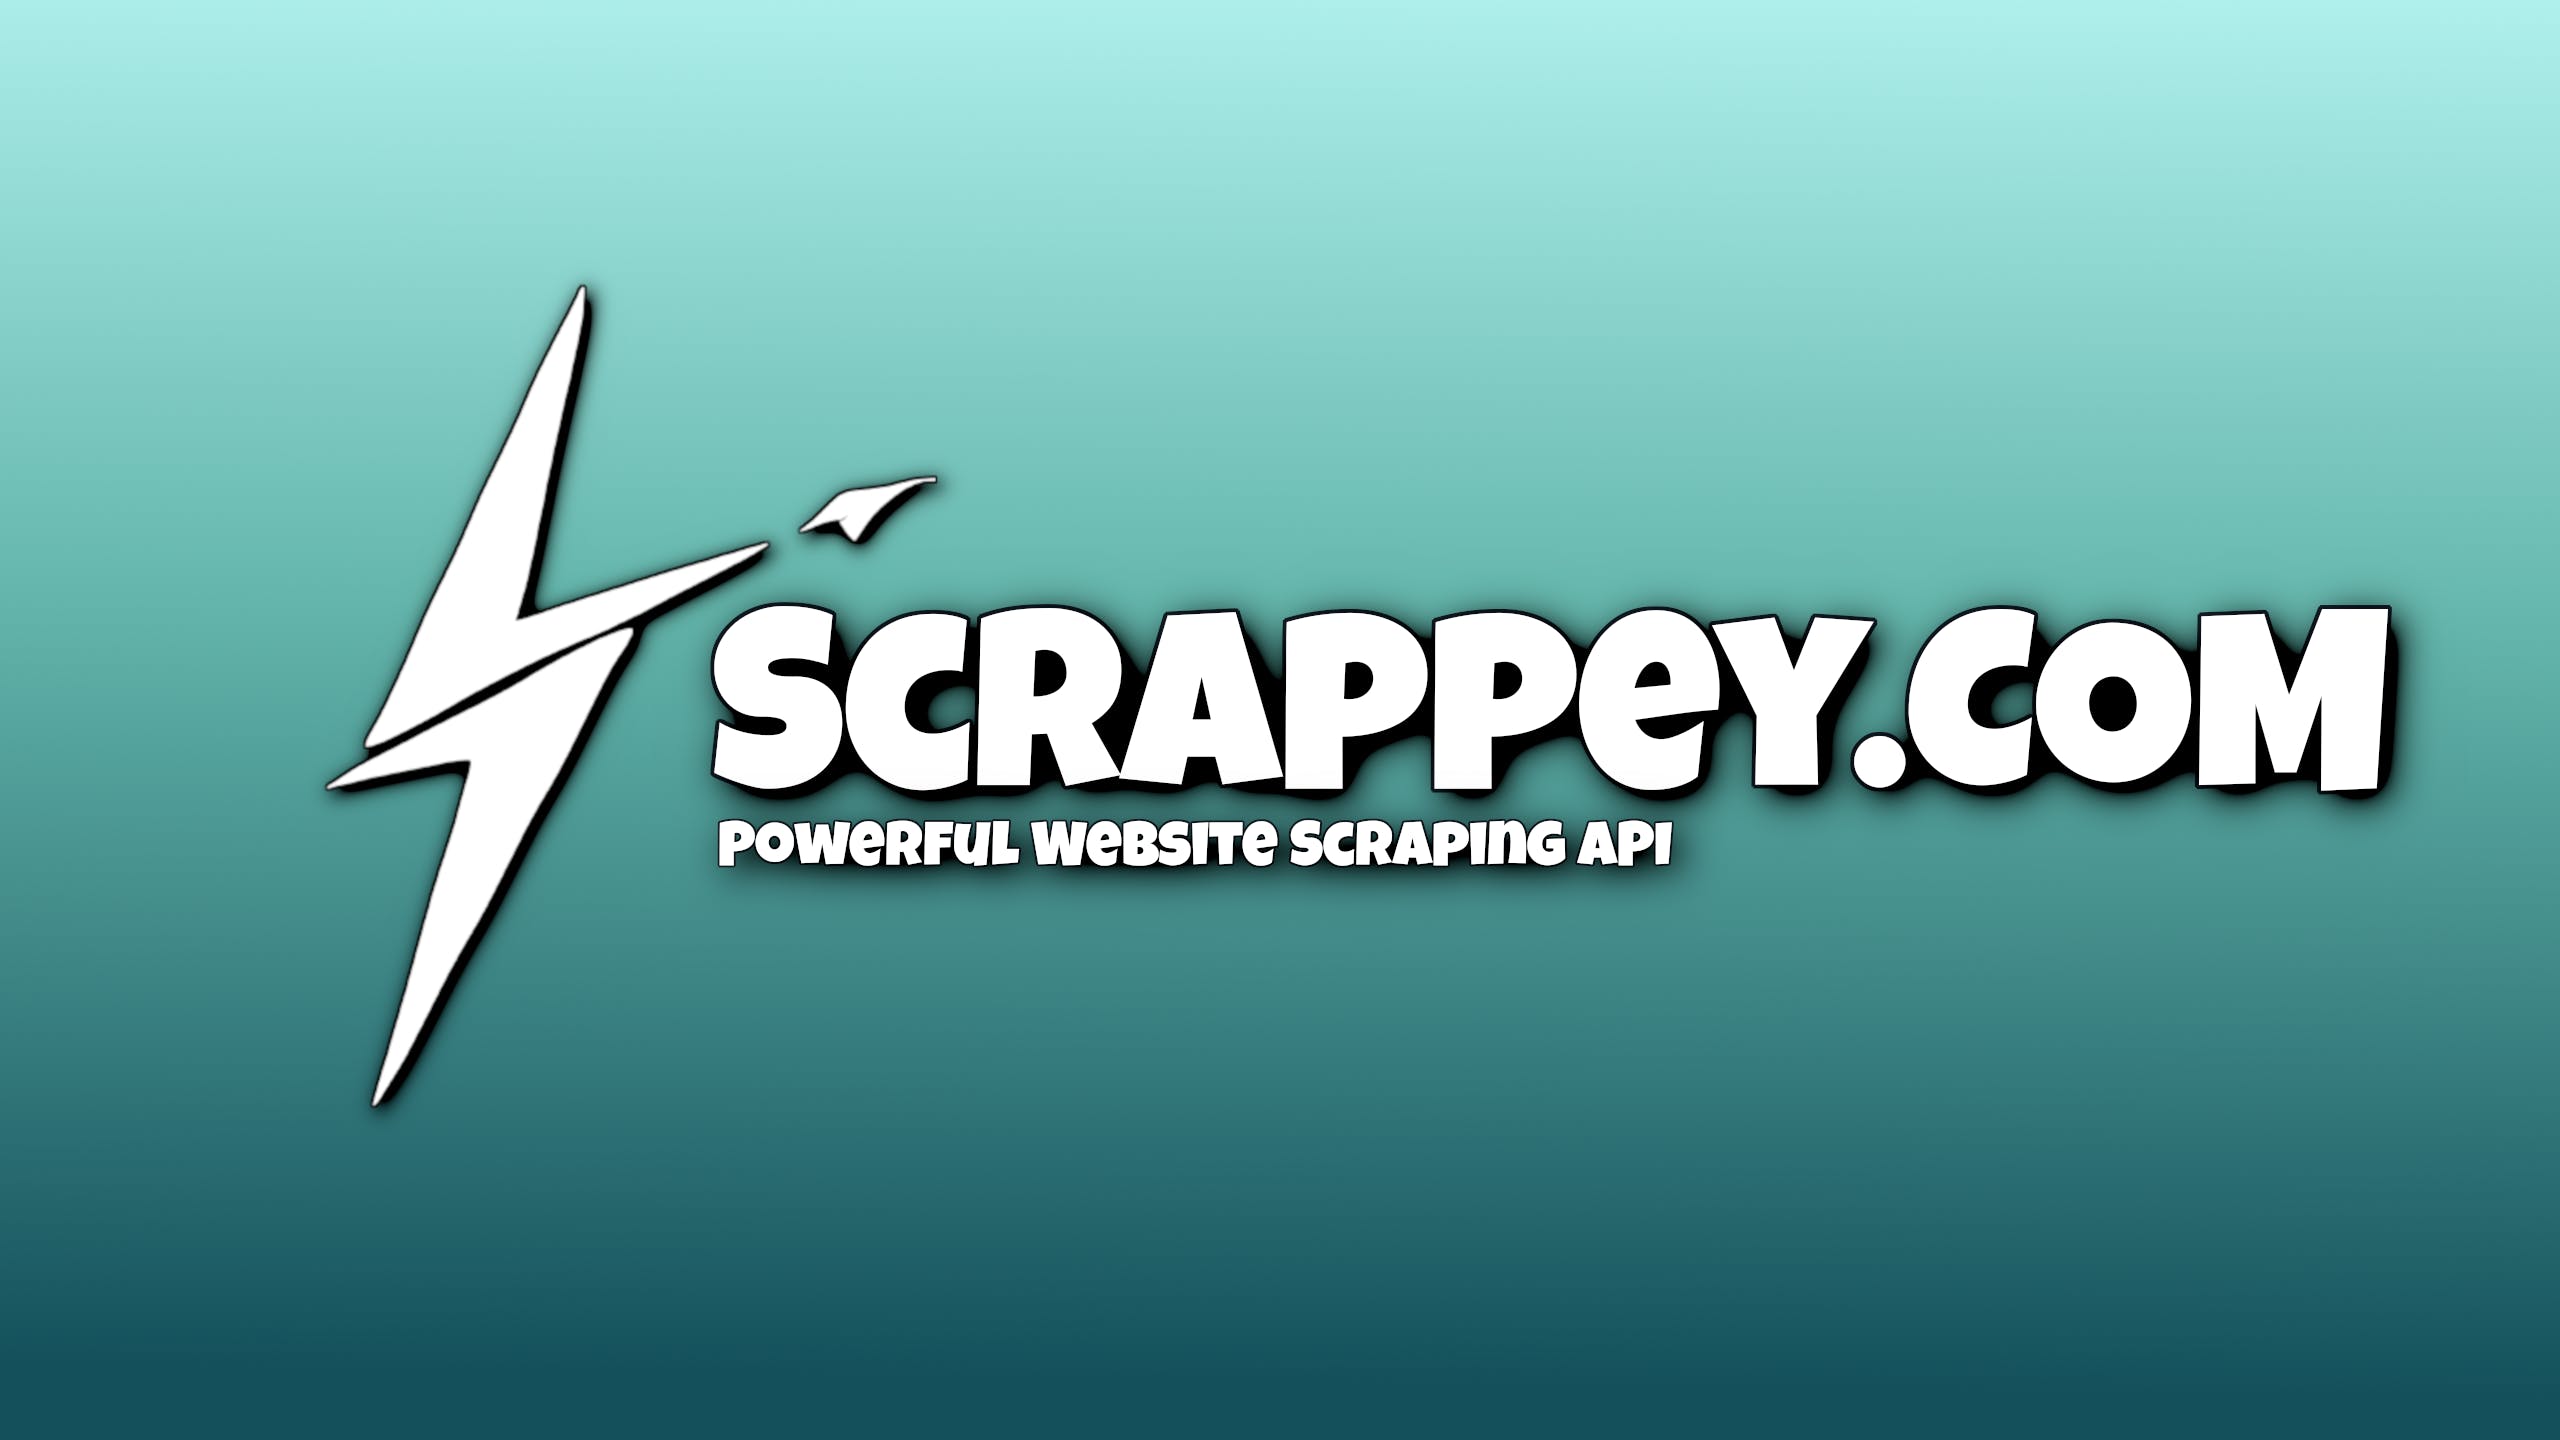 Scrappey.com - Web Scraping API media 1